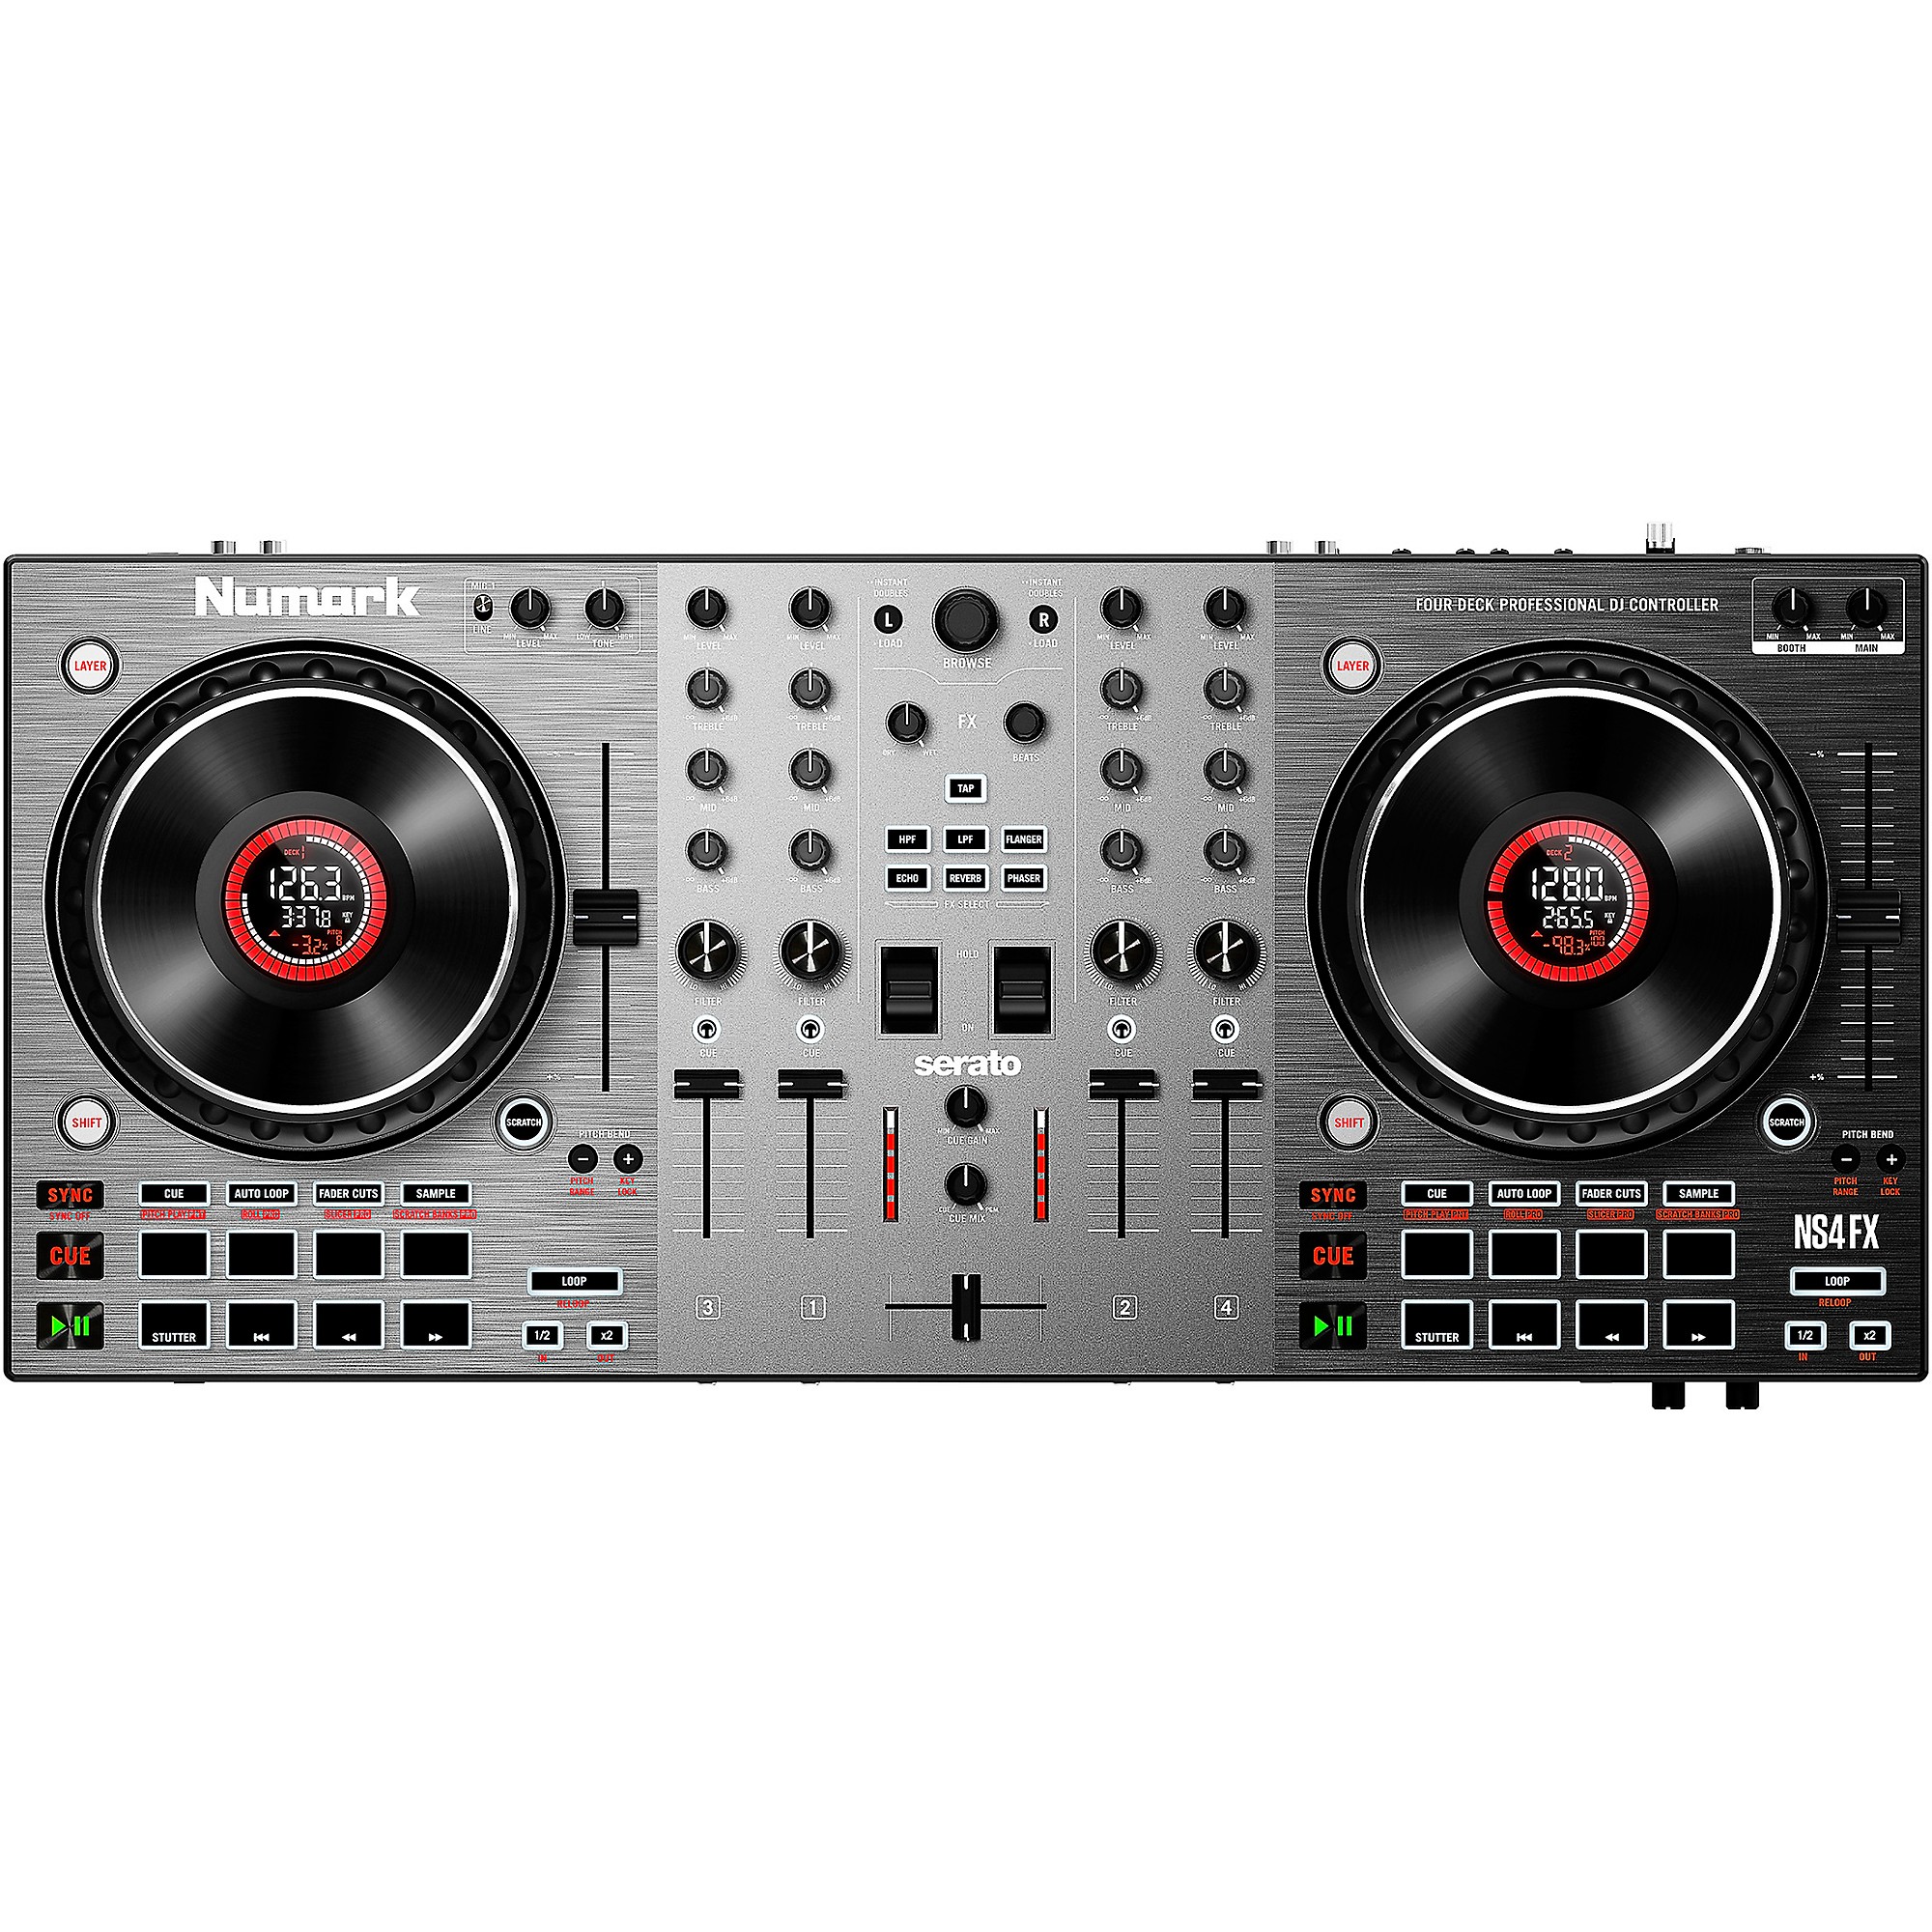 Vente Contrôleur DJ NUMARK NS4FX - Sono 85 (magasin) / Sono NANTES